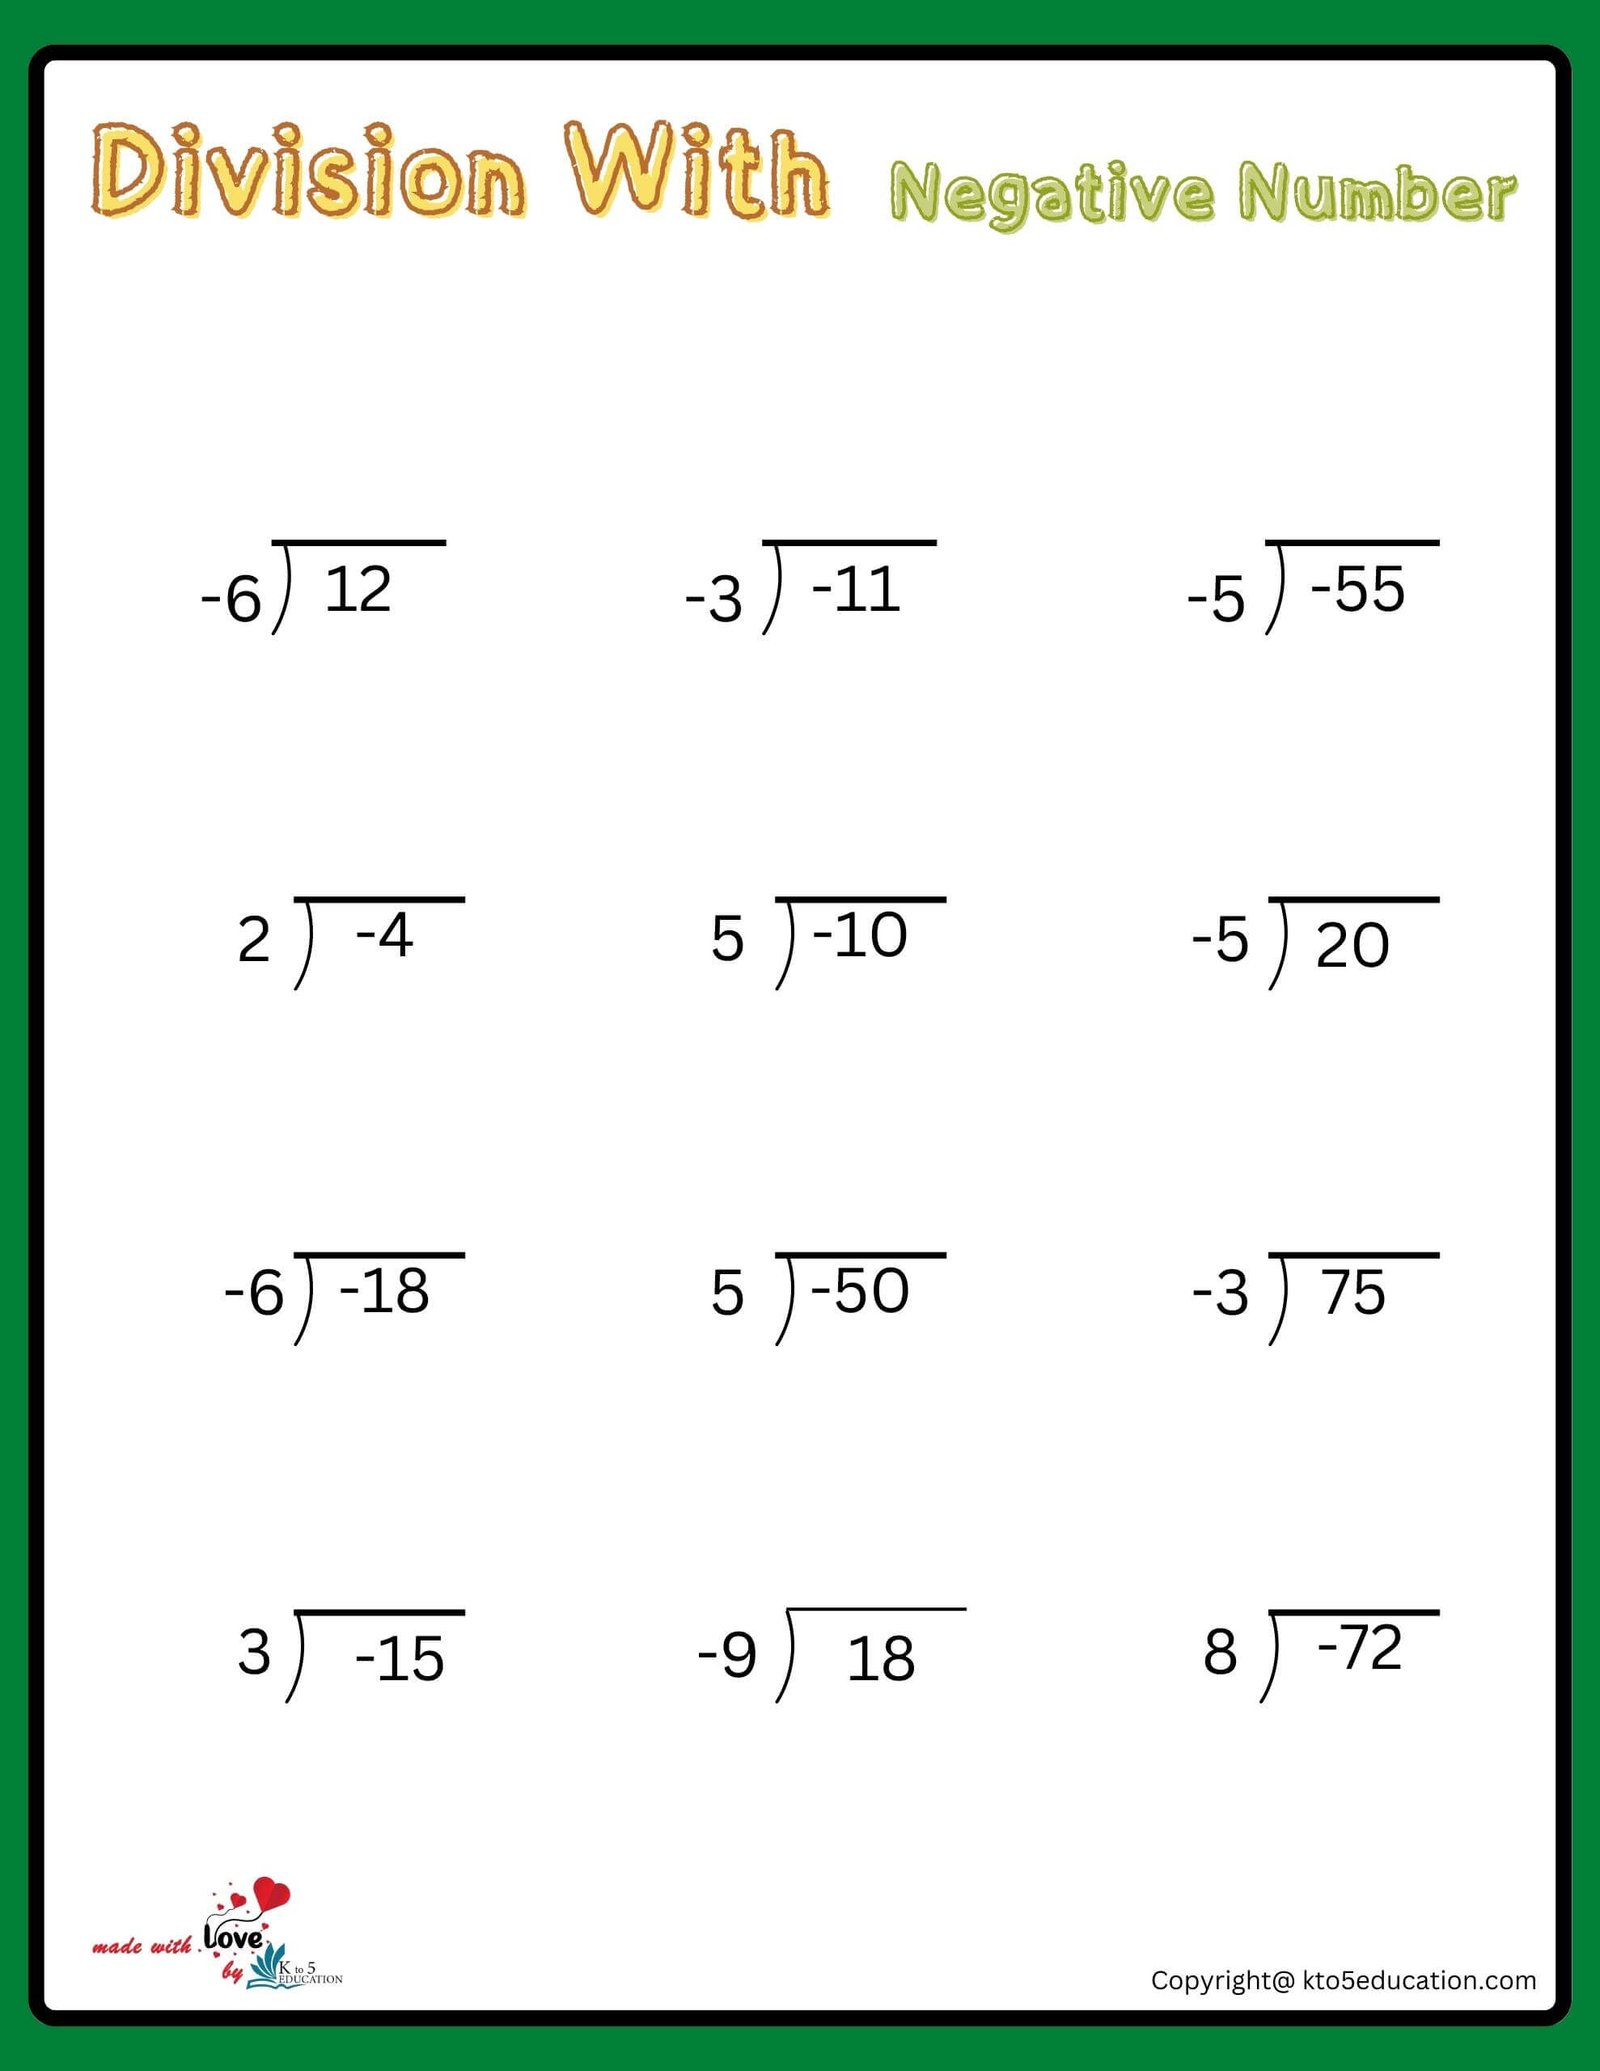 Division With Negative Number Worksheet